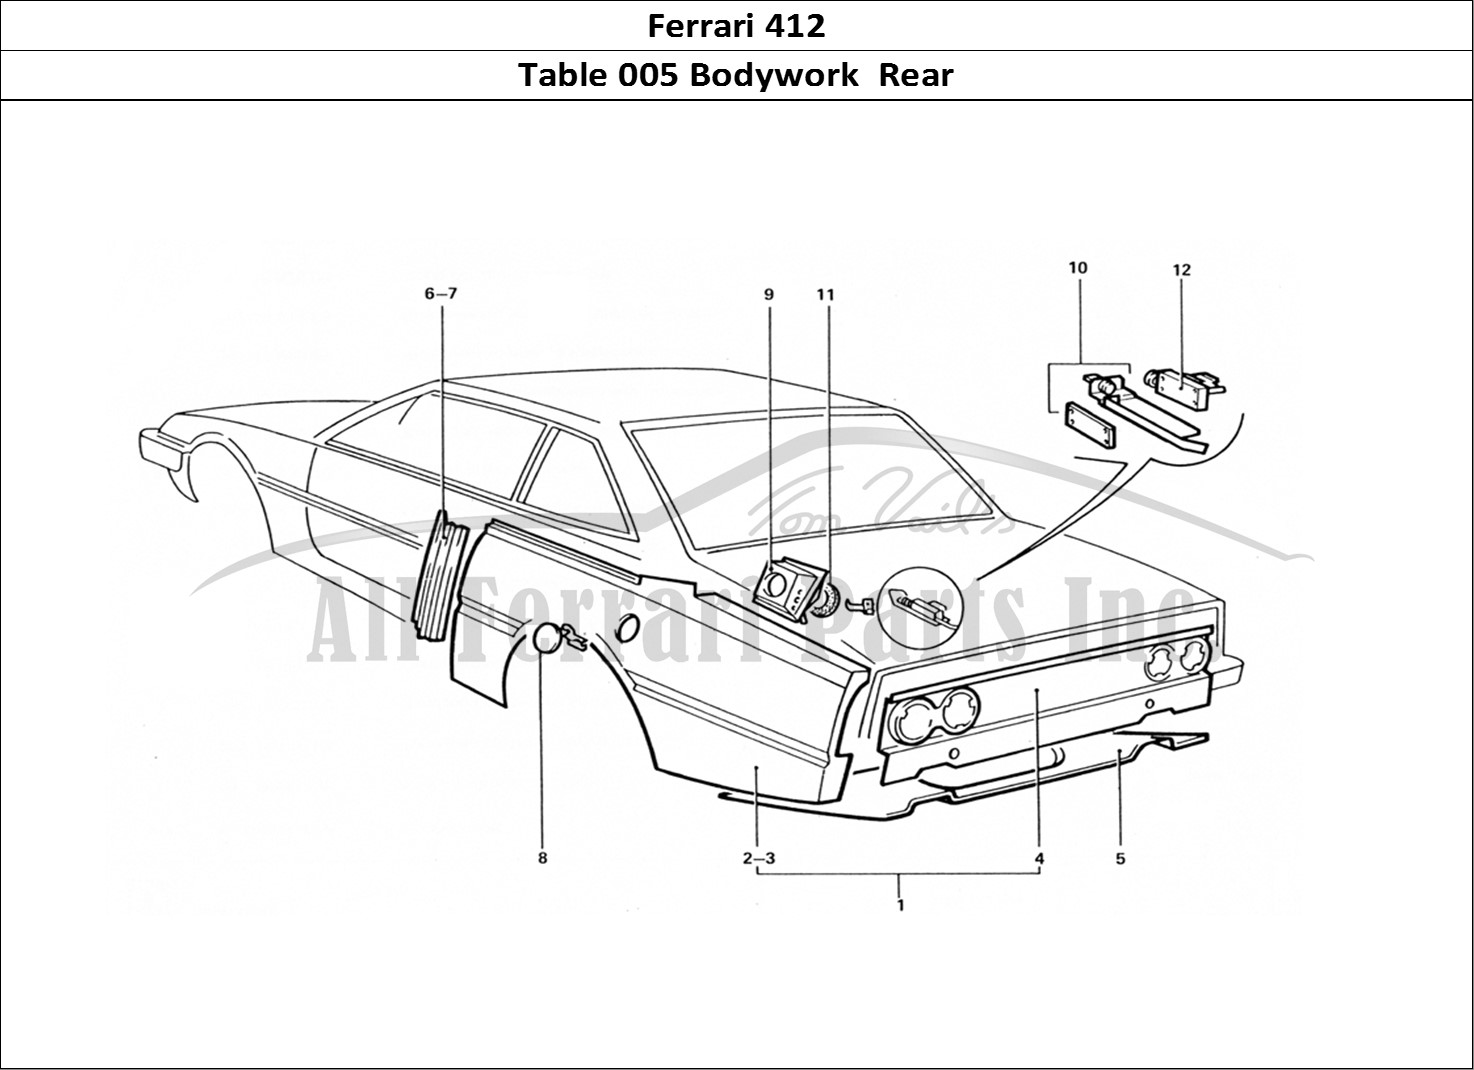 Ferrari Parts Ferrari 412 (Coachwork) Page 005 Rear End Panels